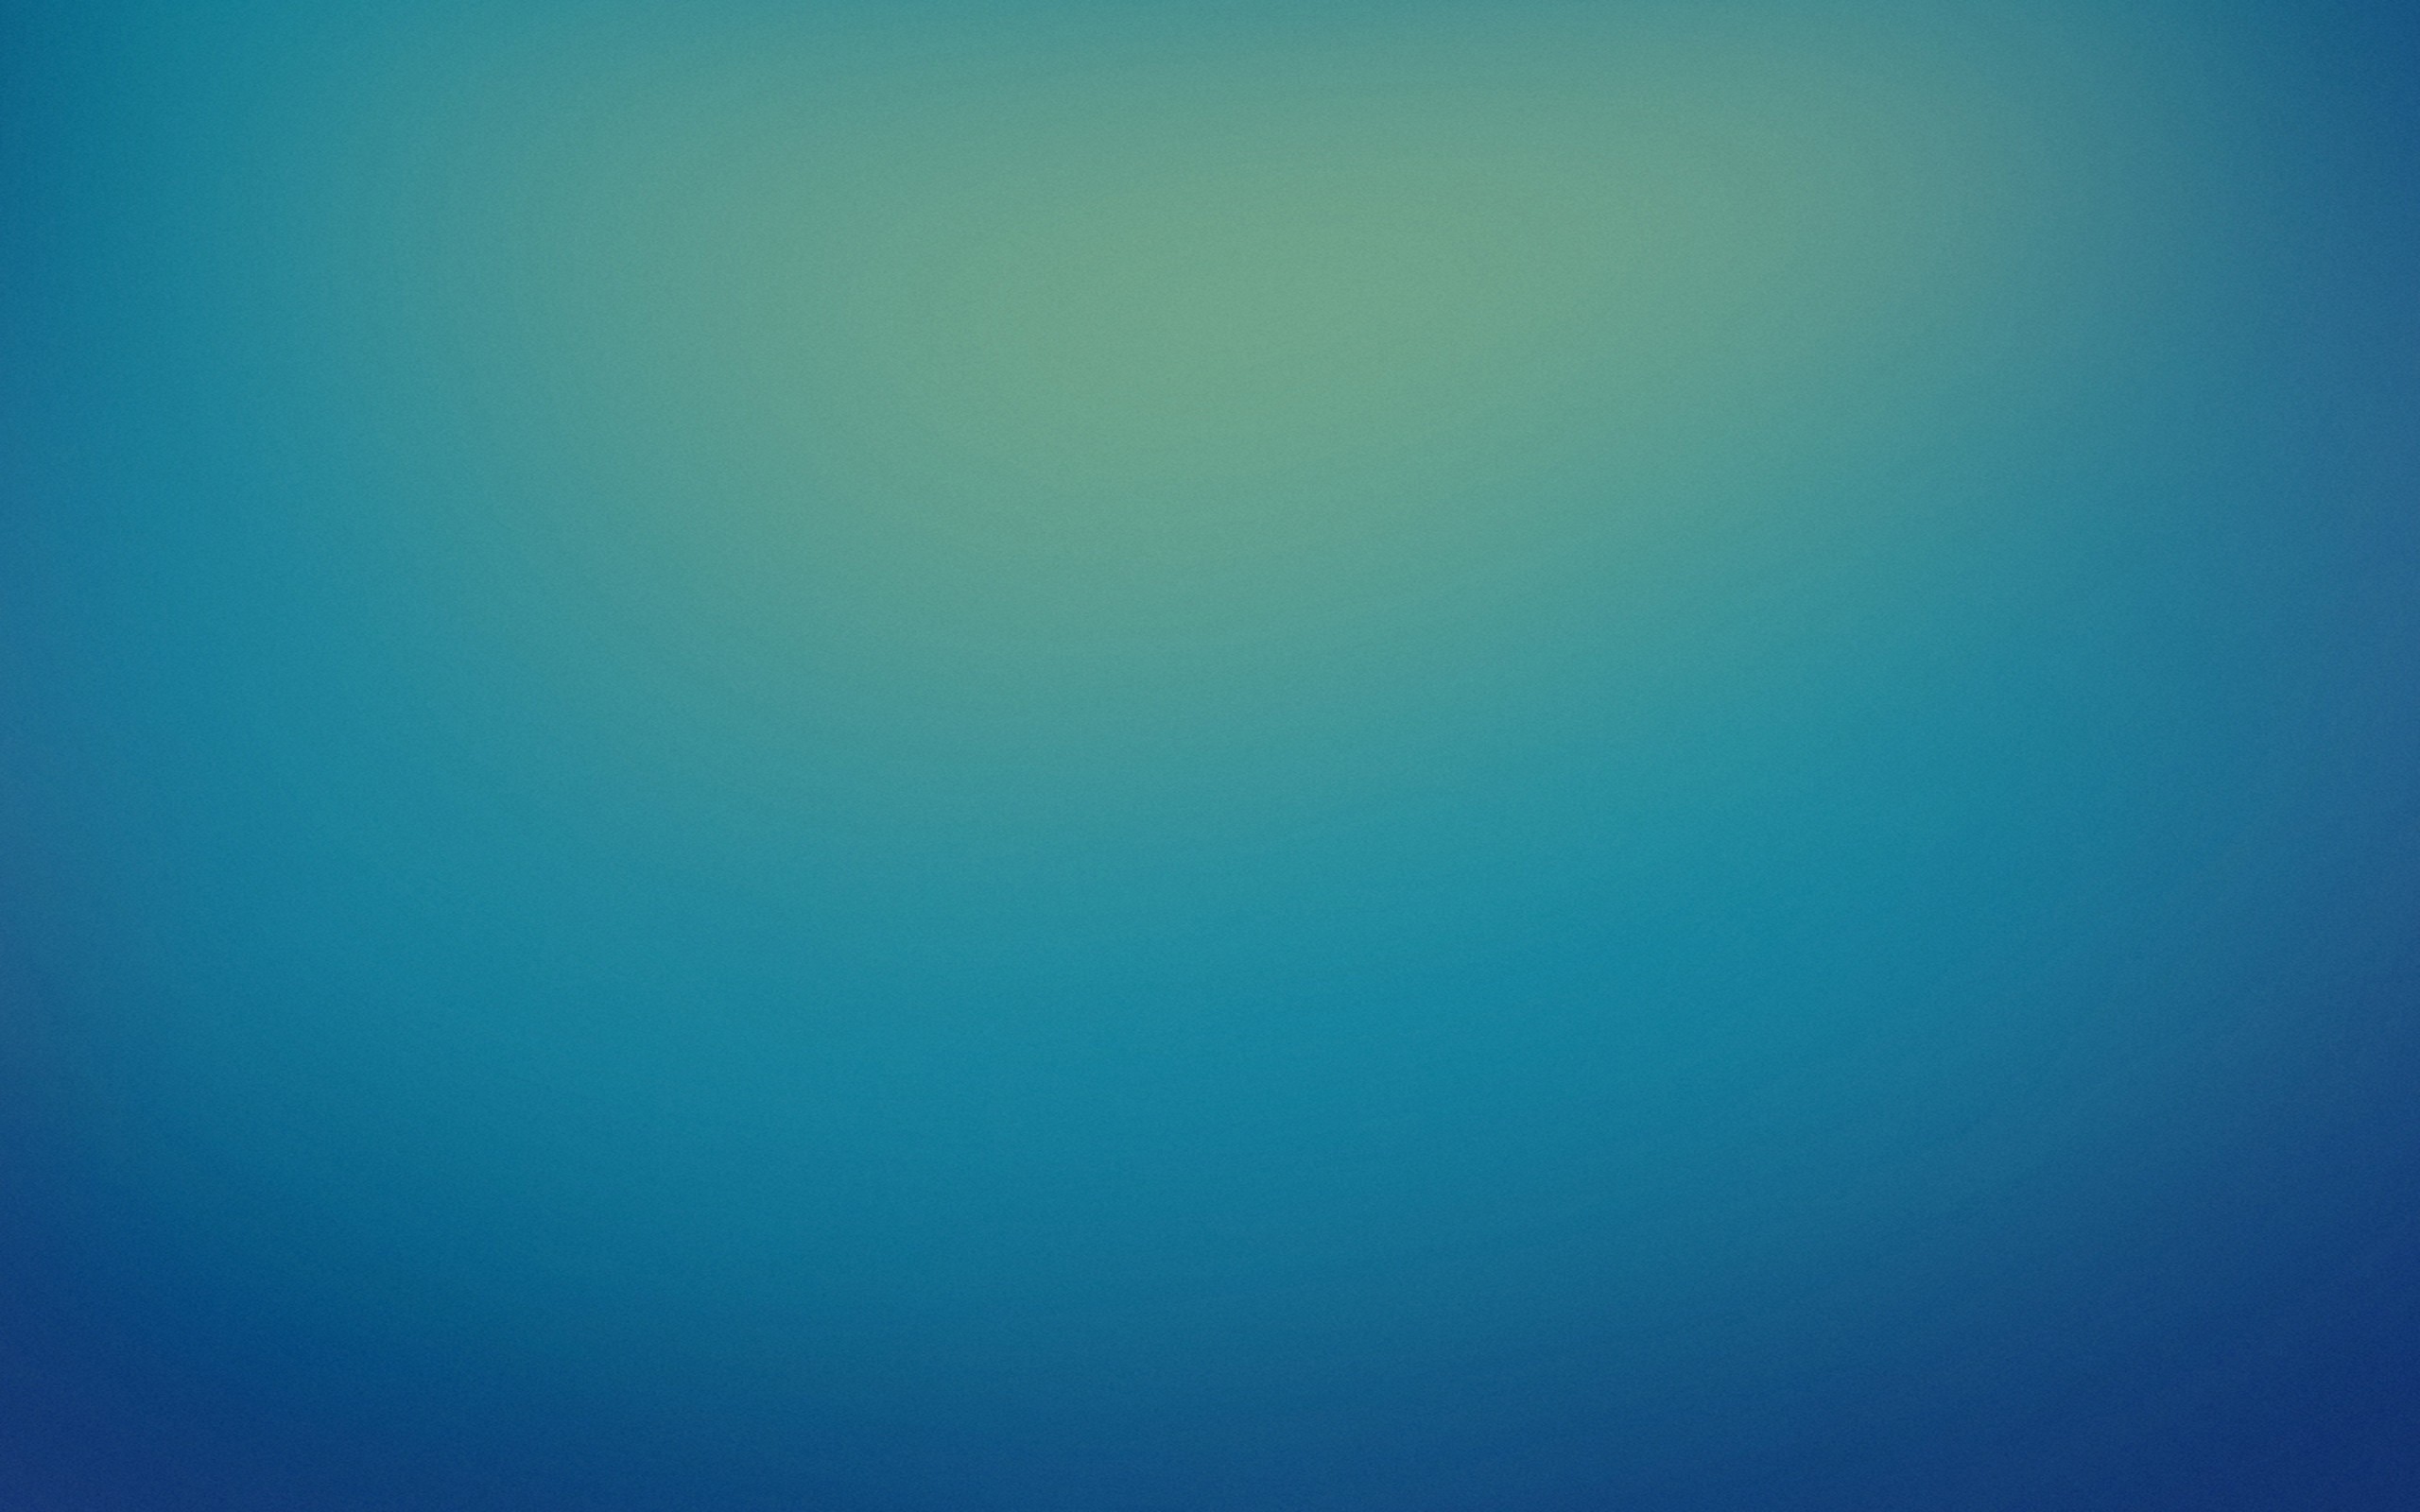 General 2560x1600 abstract blue gradient blue background digital art texture minimalism